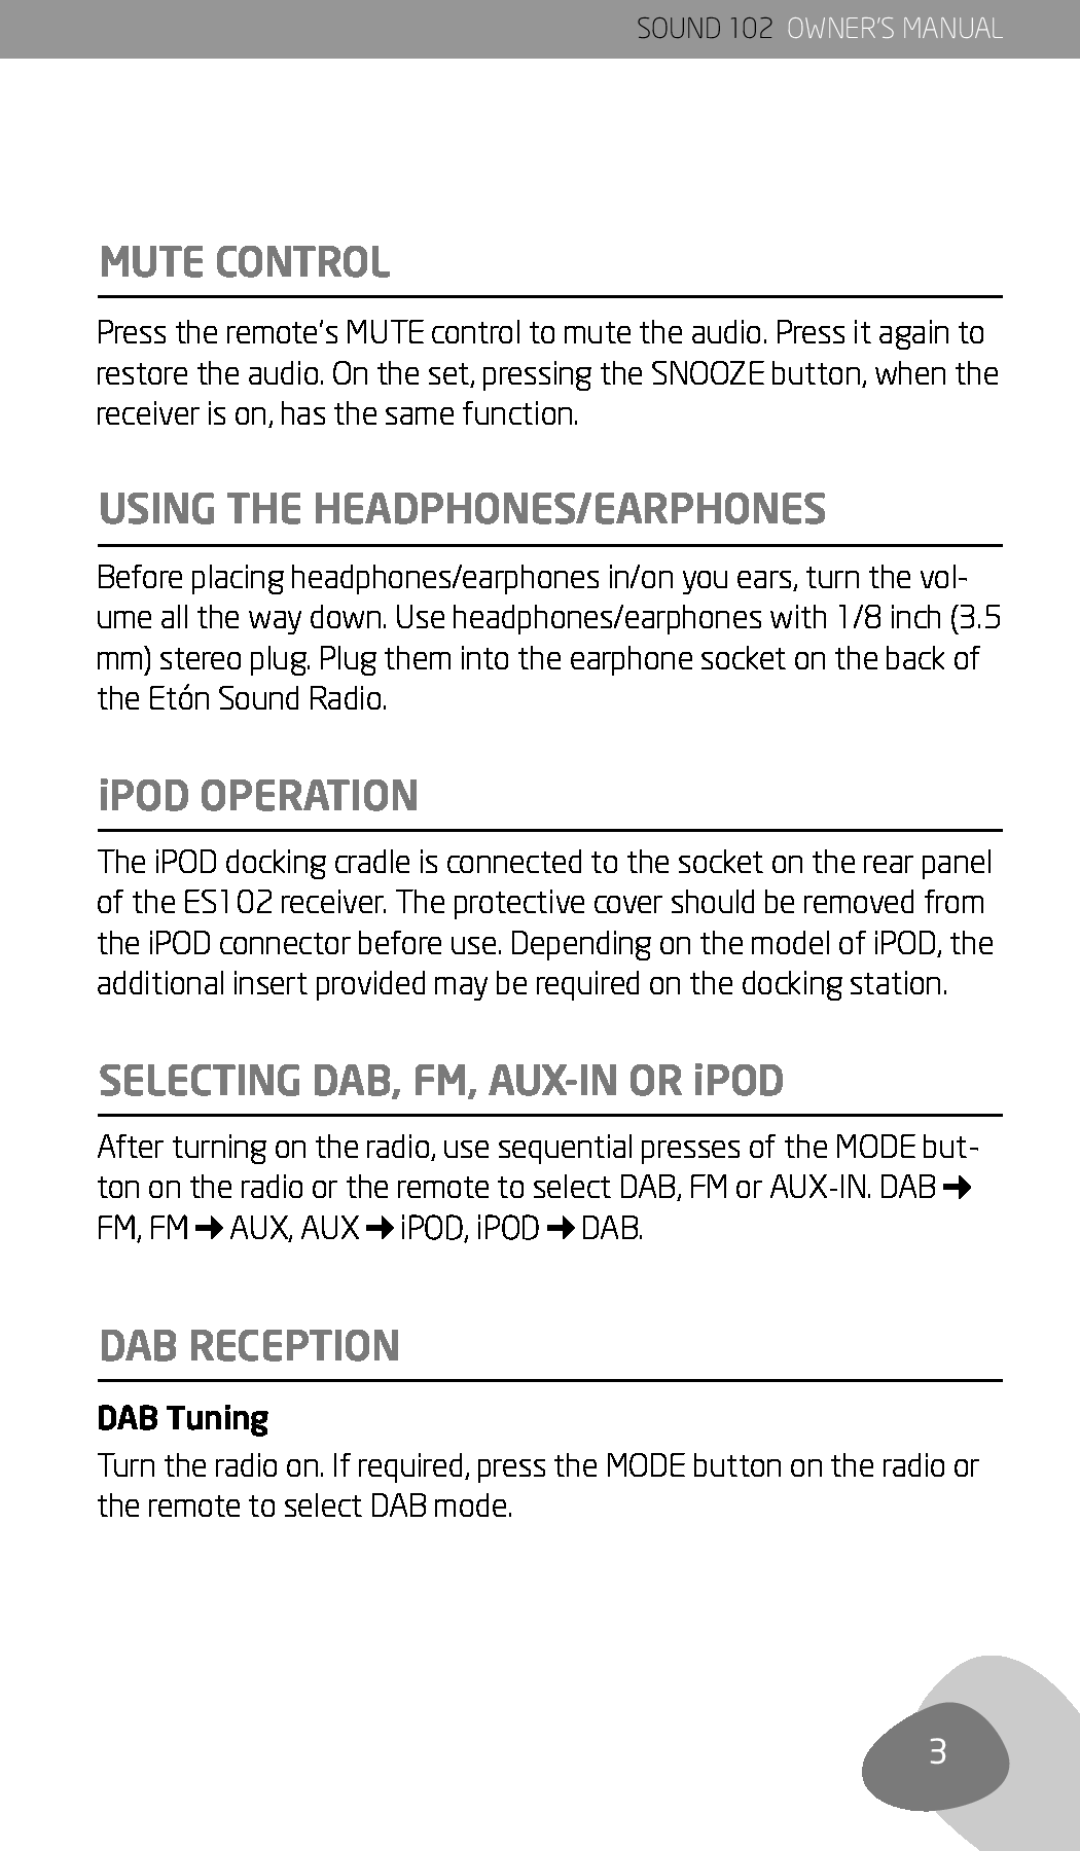 Eton 102 Mute Control, Using The Headphones/Earphones, iPOD OPERATION, SELECTING DAB, FM, AUX-INOR iPOD, Dab Reception 